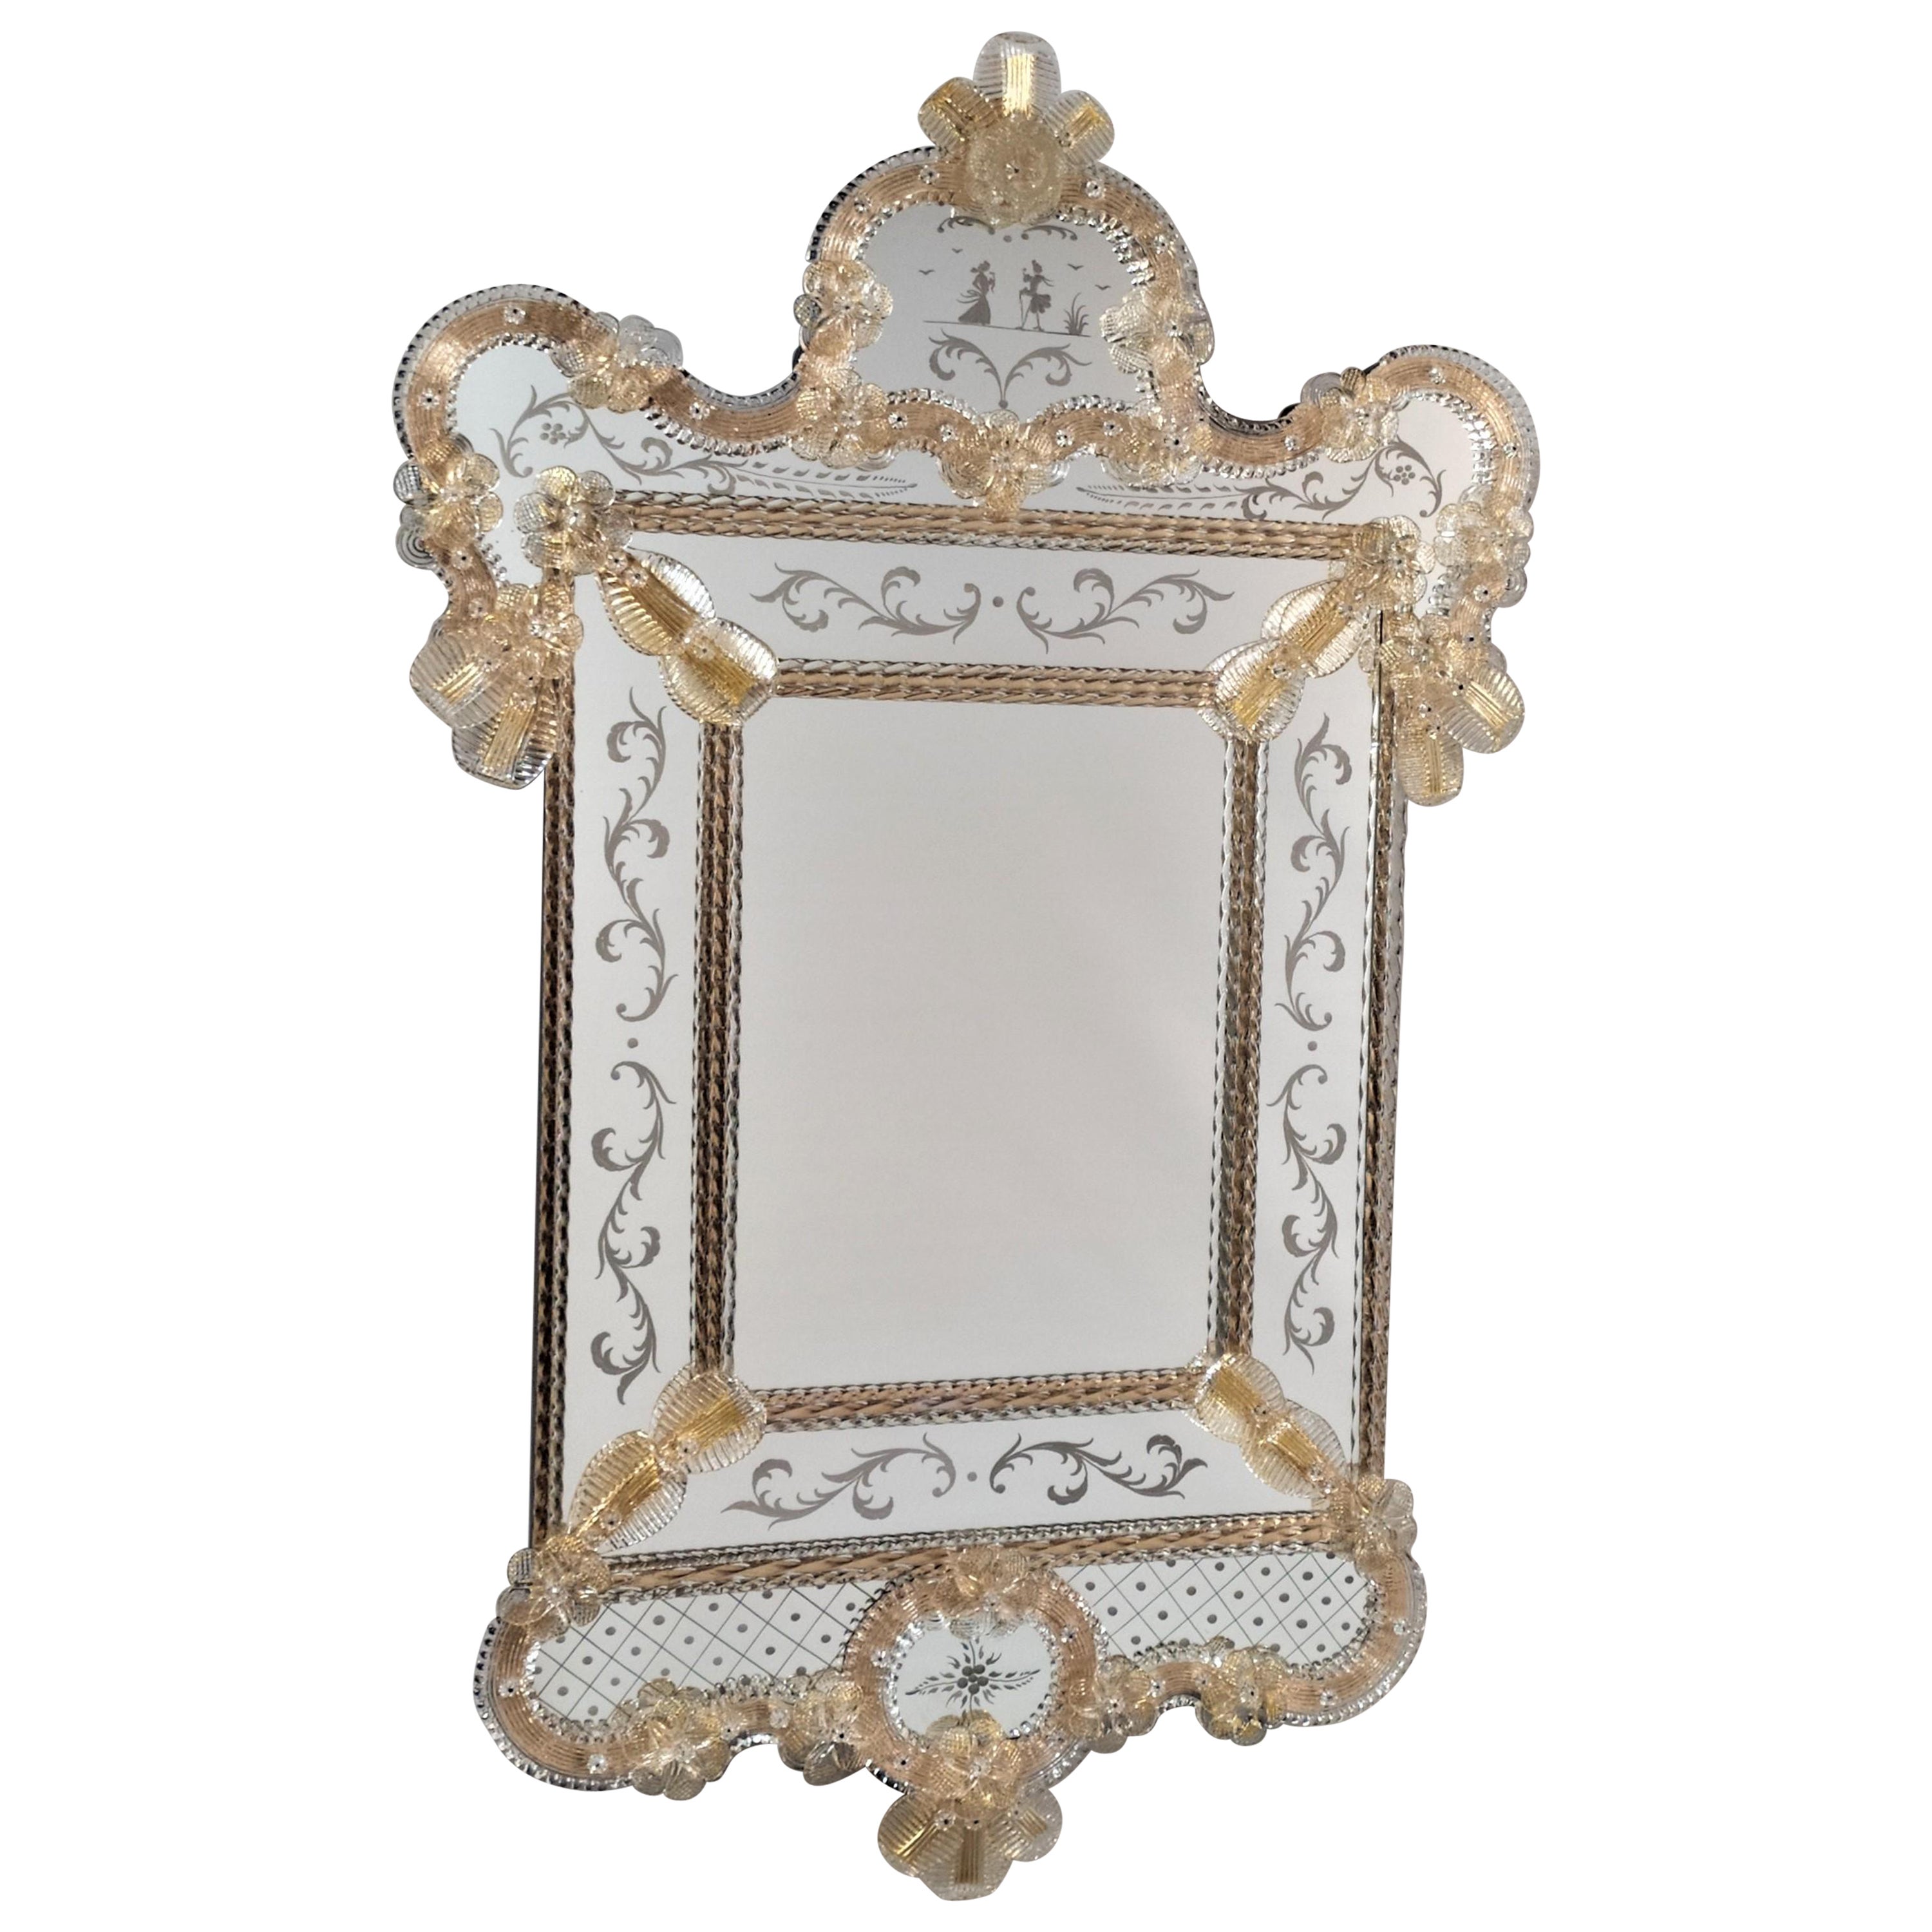 Miroir "Ca'bembo" en verre de Murano de style vénitien par Fratelli Tosi, fabriqué en Italie